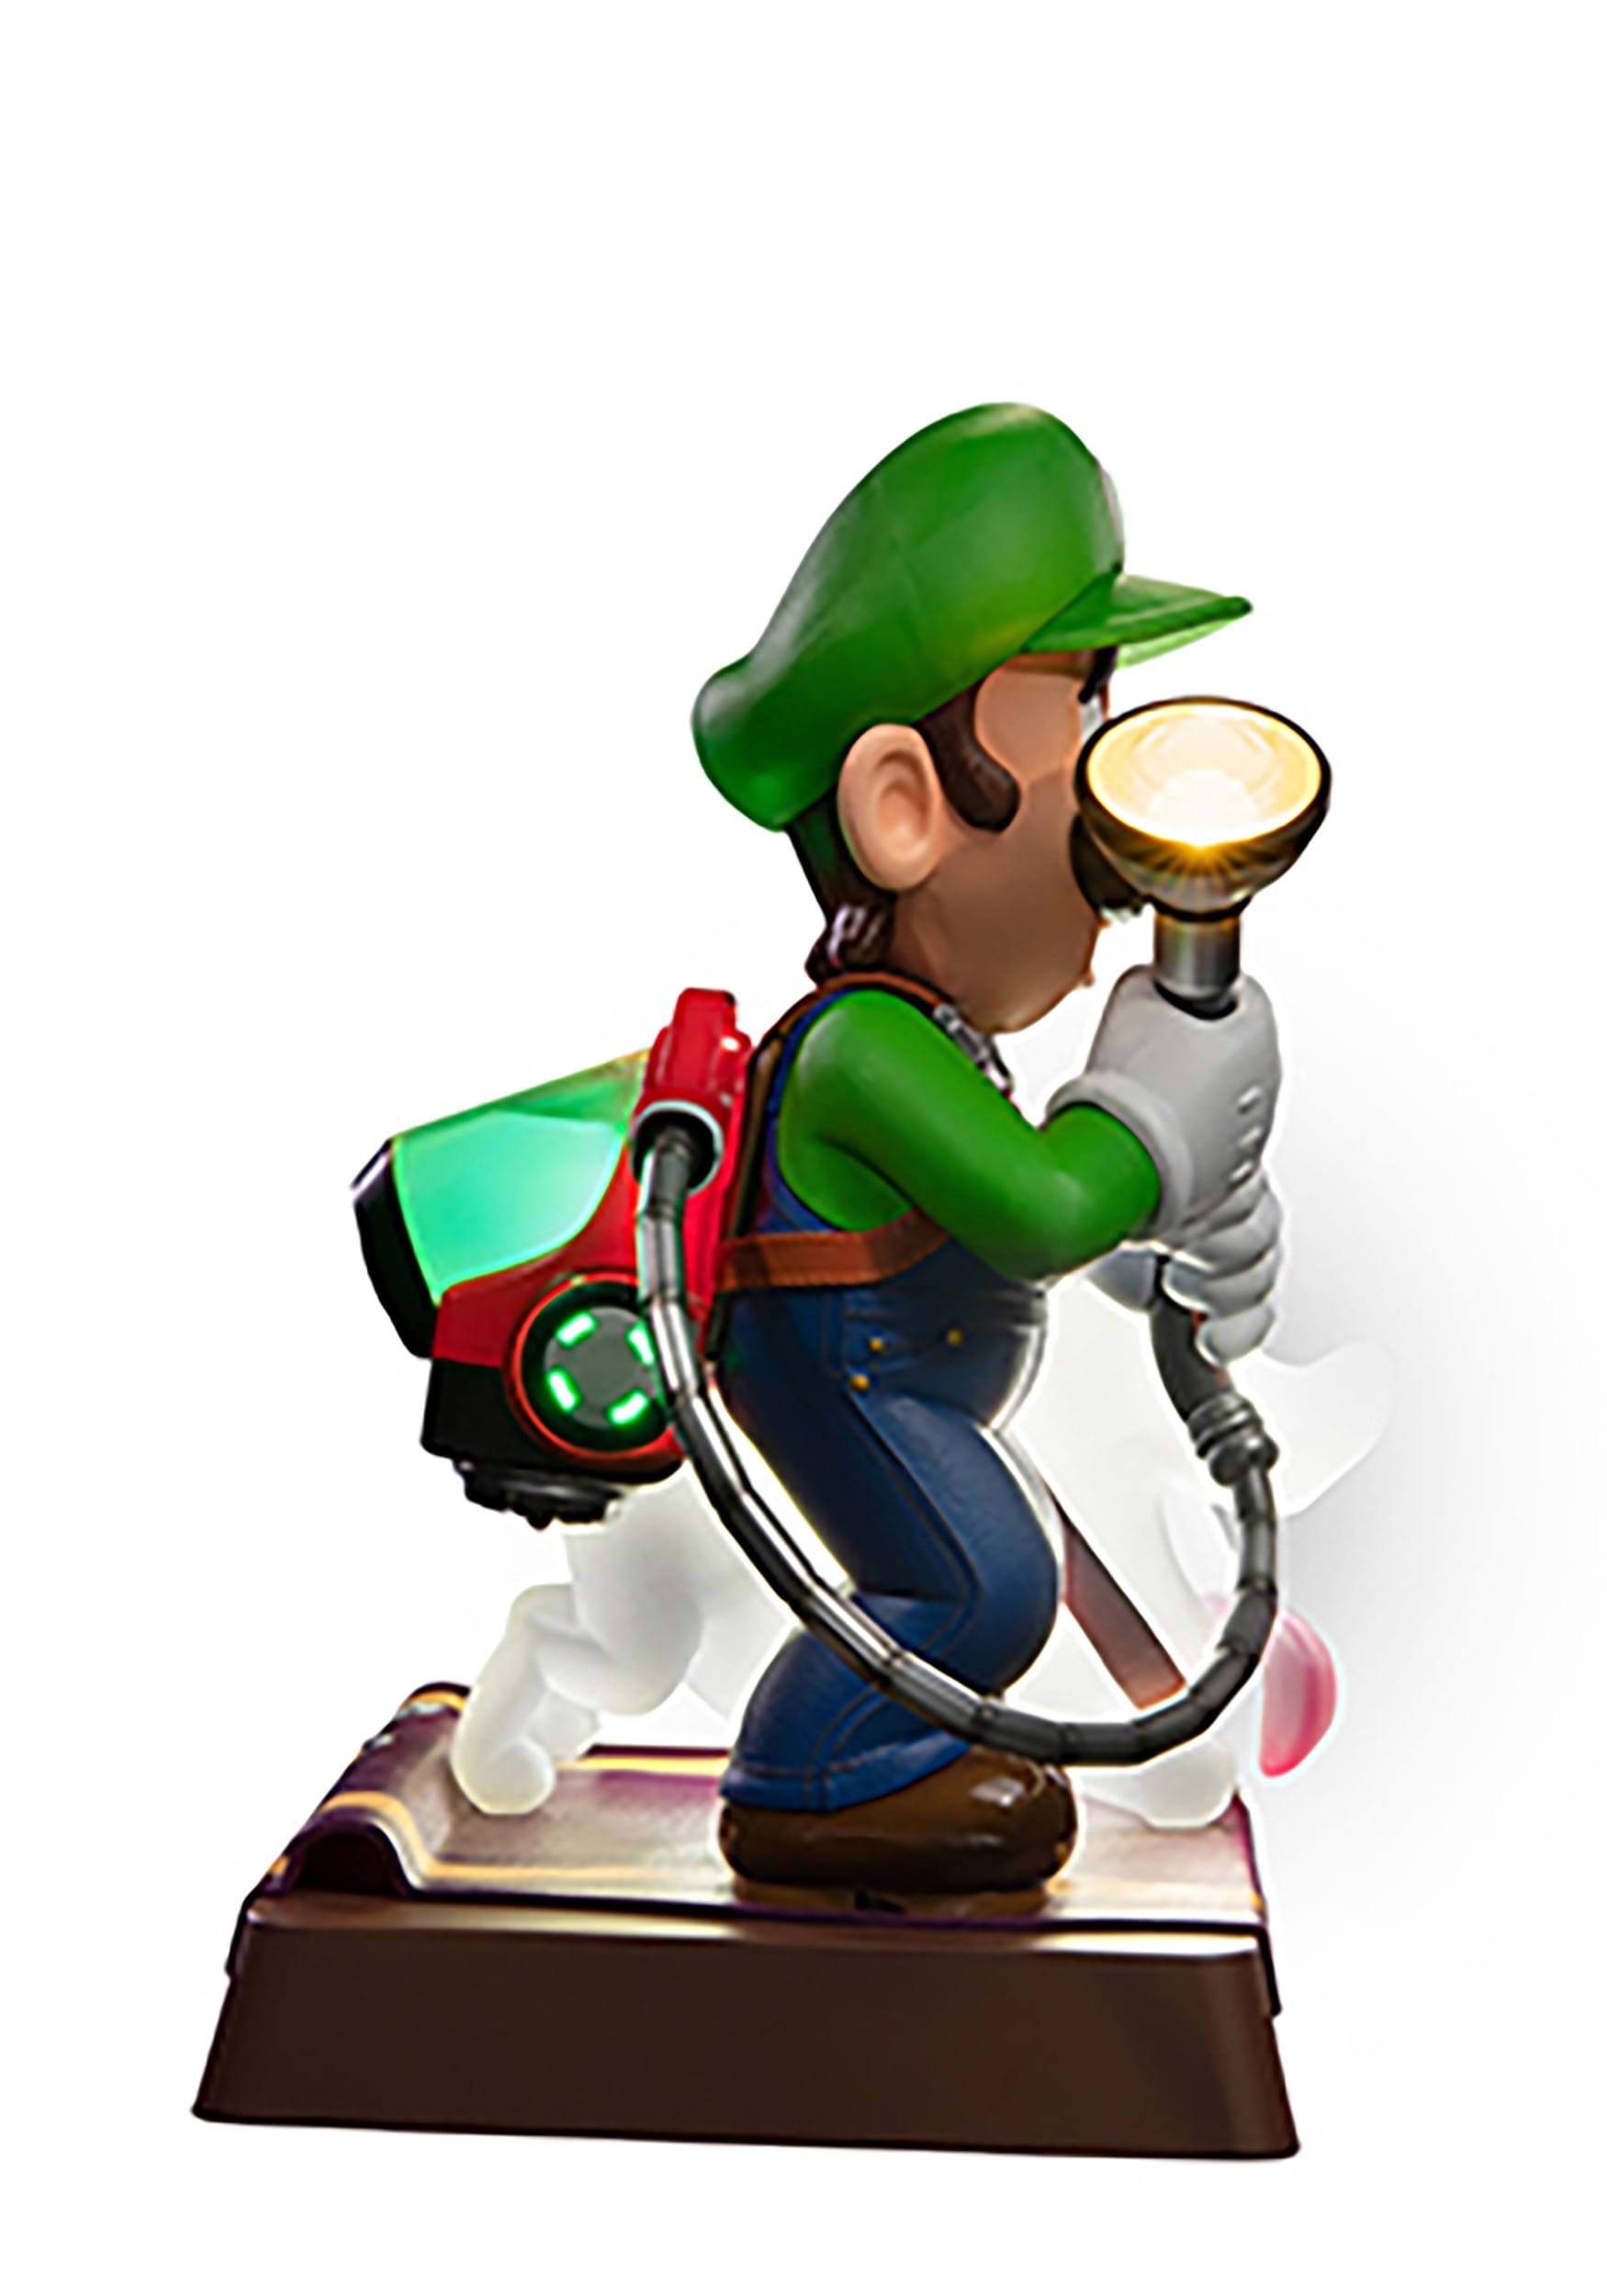 Luigi's Mansion 3 – Luigi and Polterpup Exclusive Edition